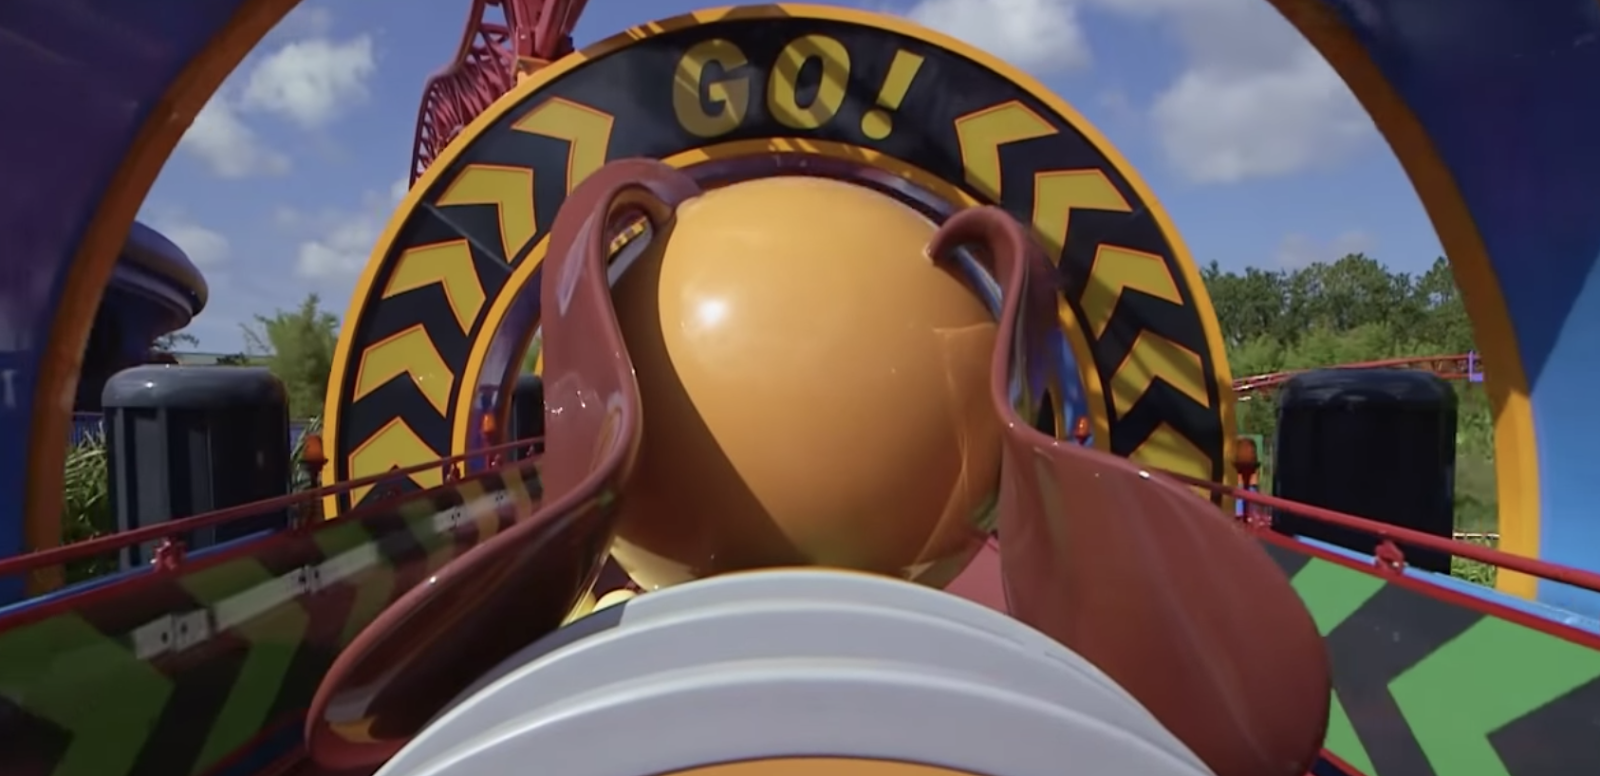 DisneyMagicMoments: Go! Go! Go! for a Ride on Slinky Dog Dash at Disney's Hollywood  Studios